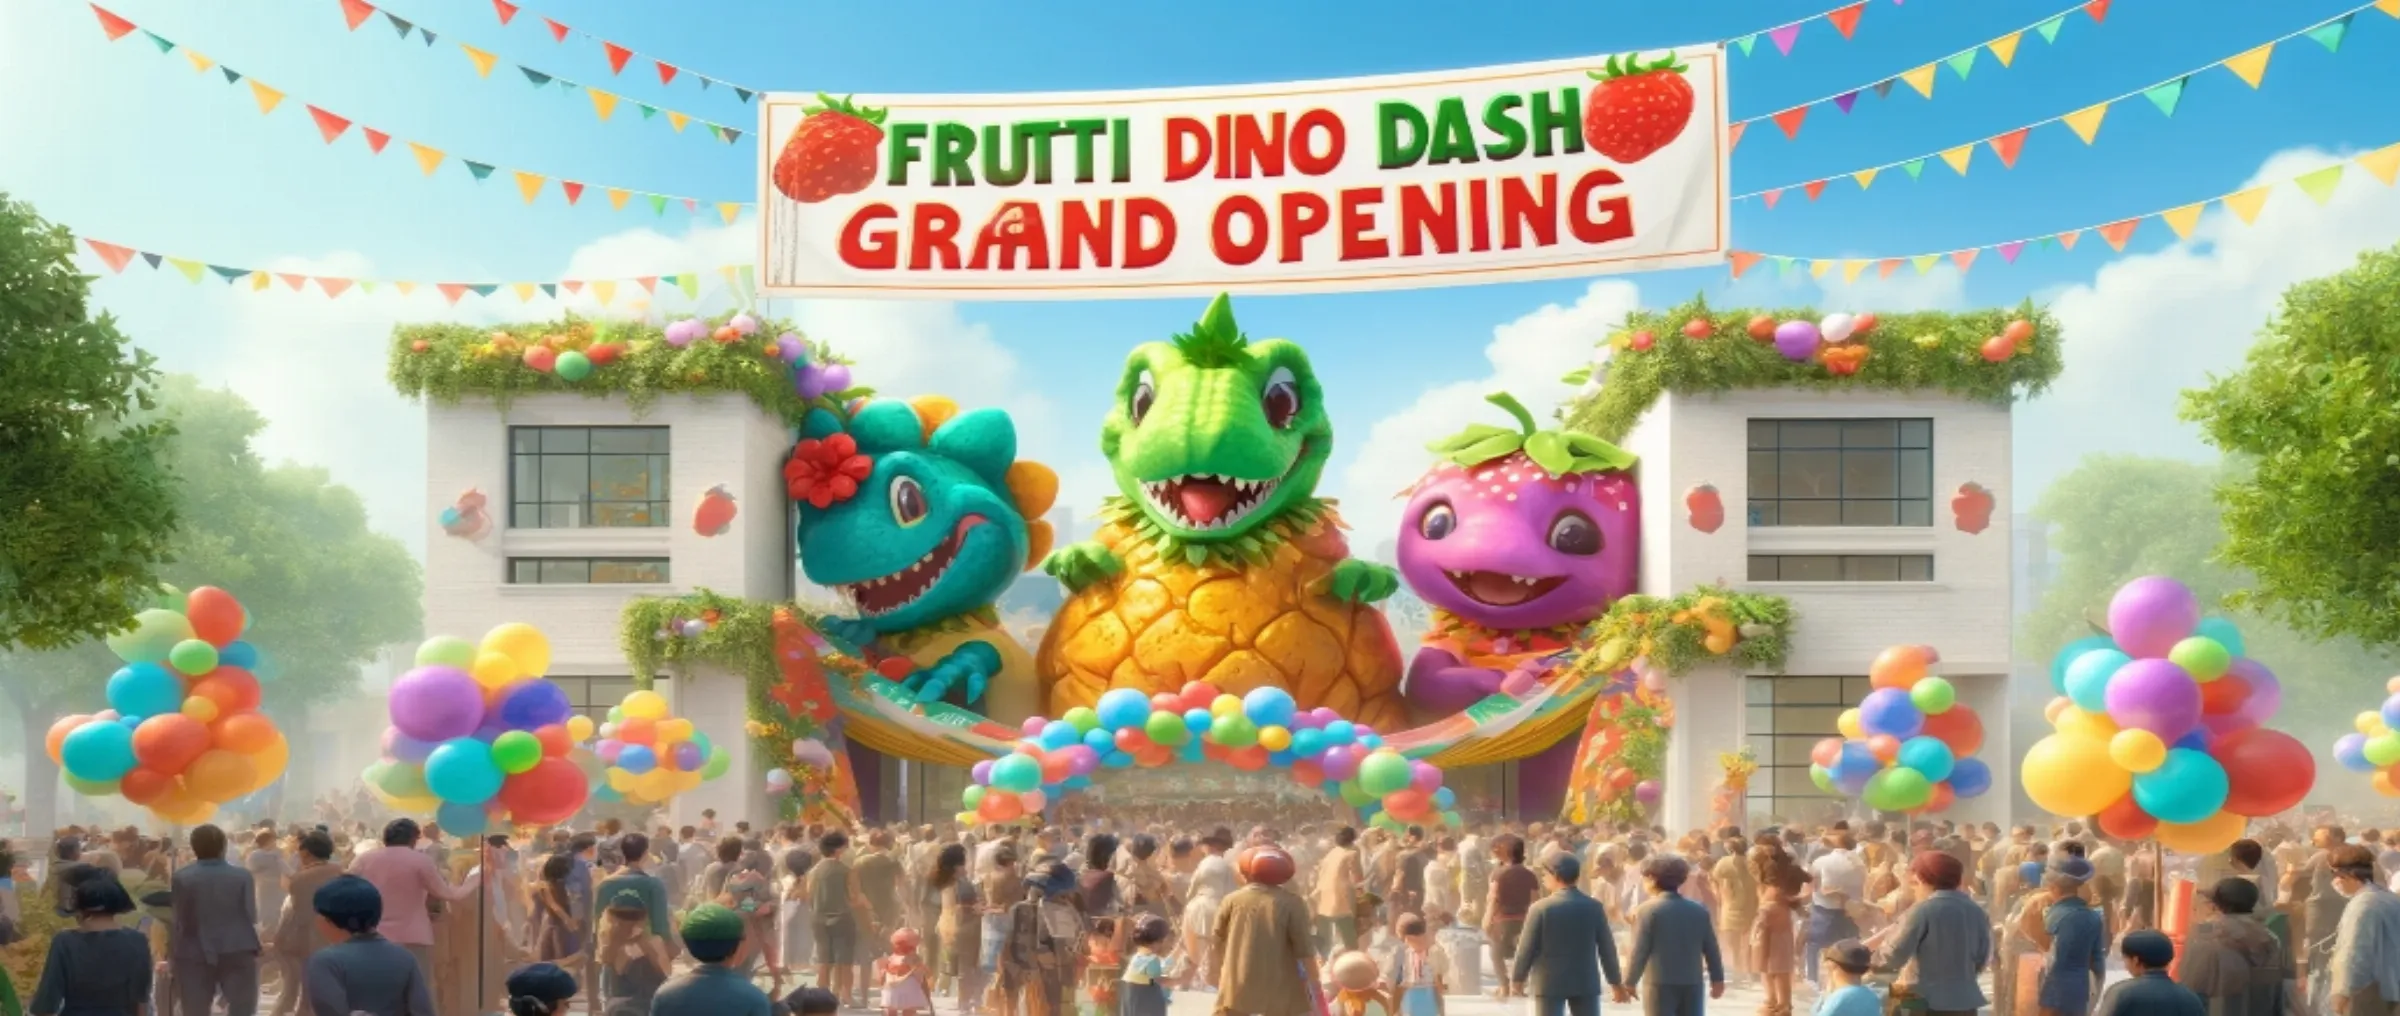 The grand opening of Frutti Dino Dash